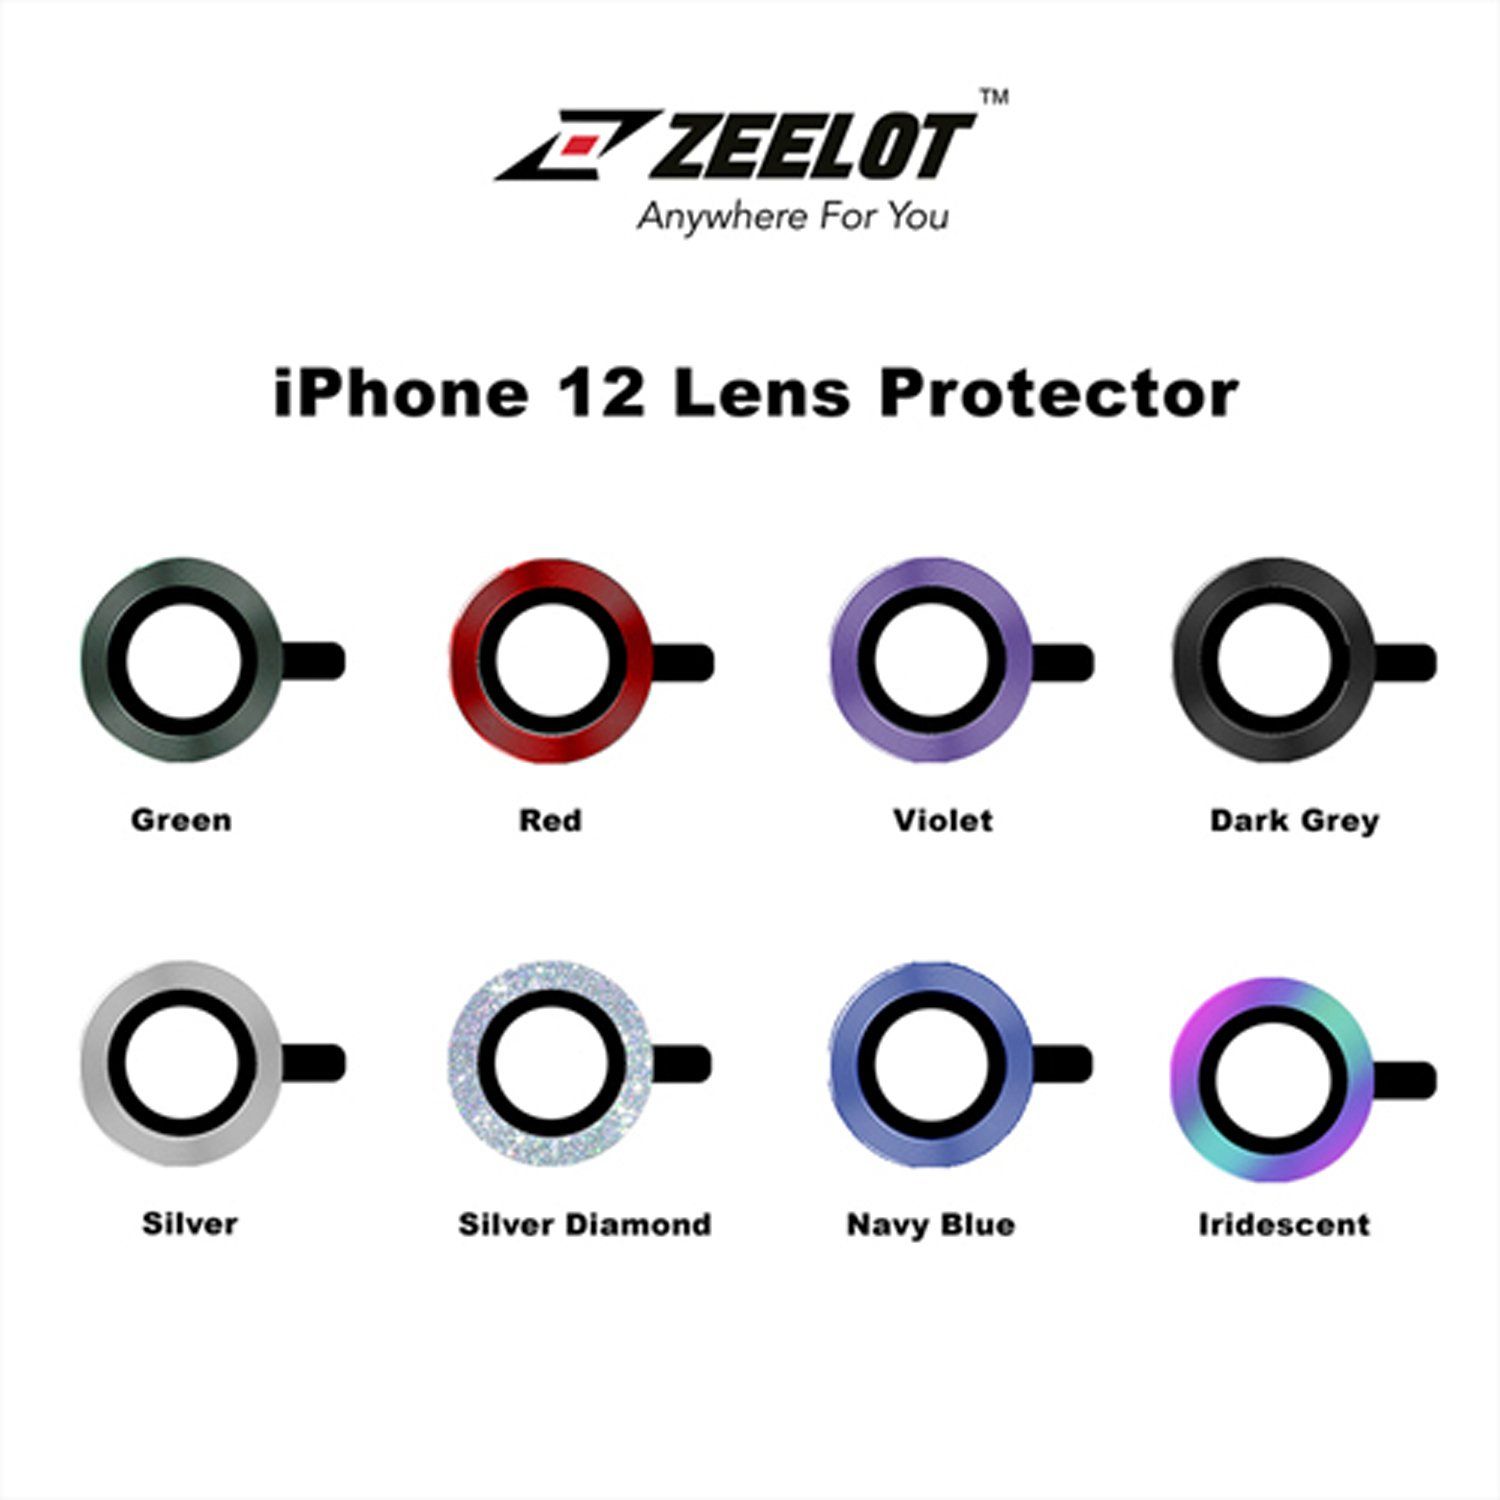 ZEELOT Titanium Steel with Lens Protector for iPhone 12 Pro Max 6.7" (Three Cameras), Navy Blue Default ZEELOT 